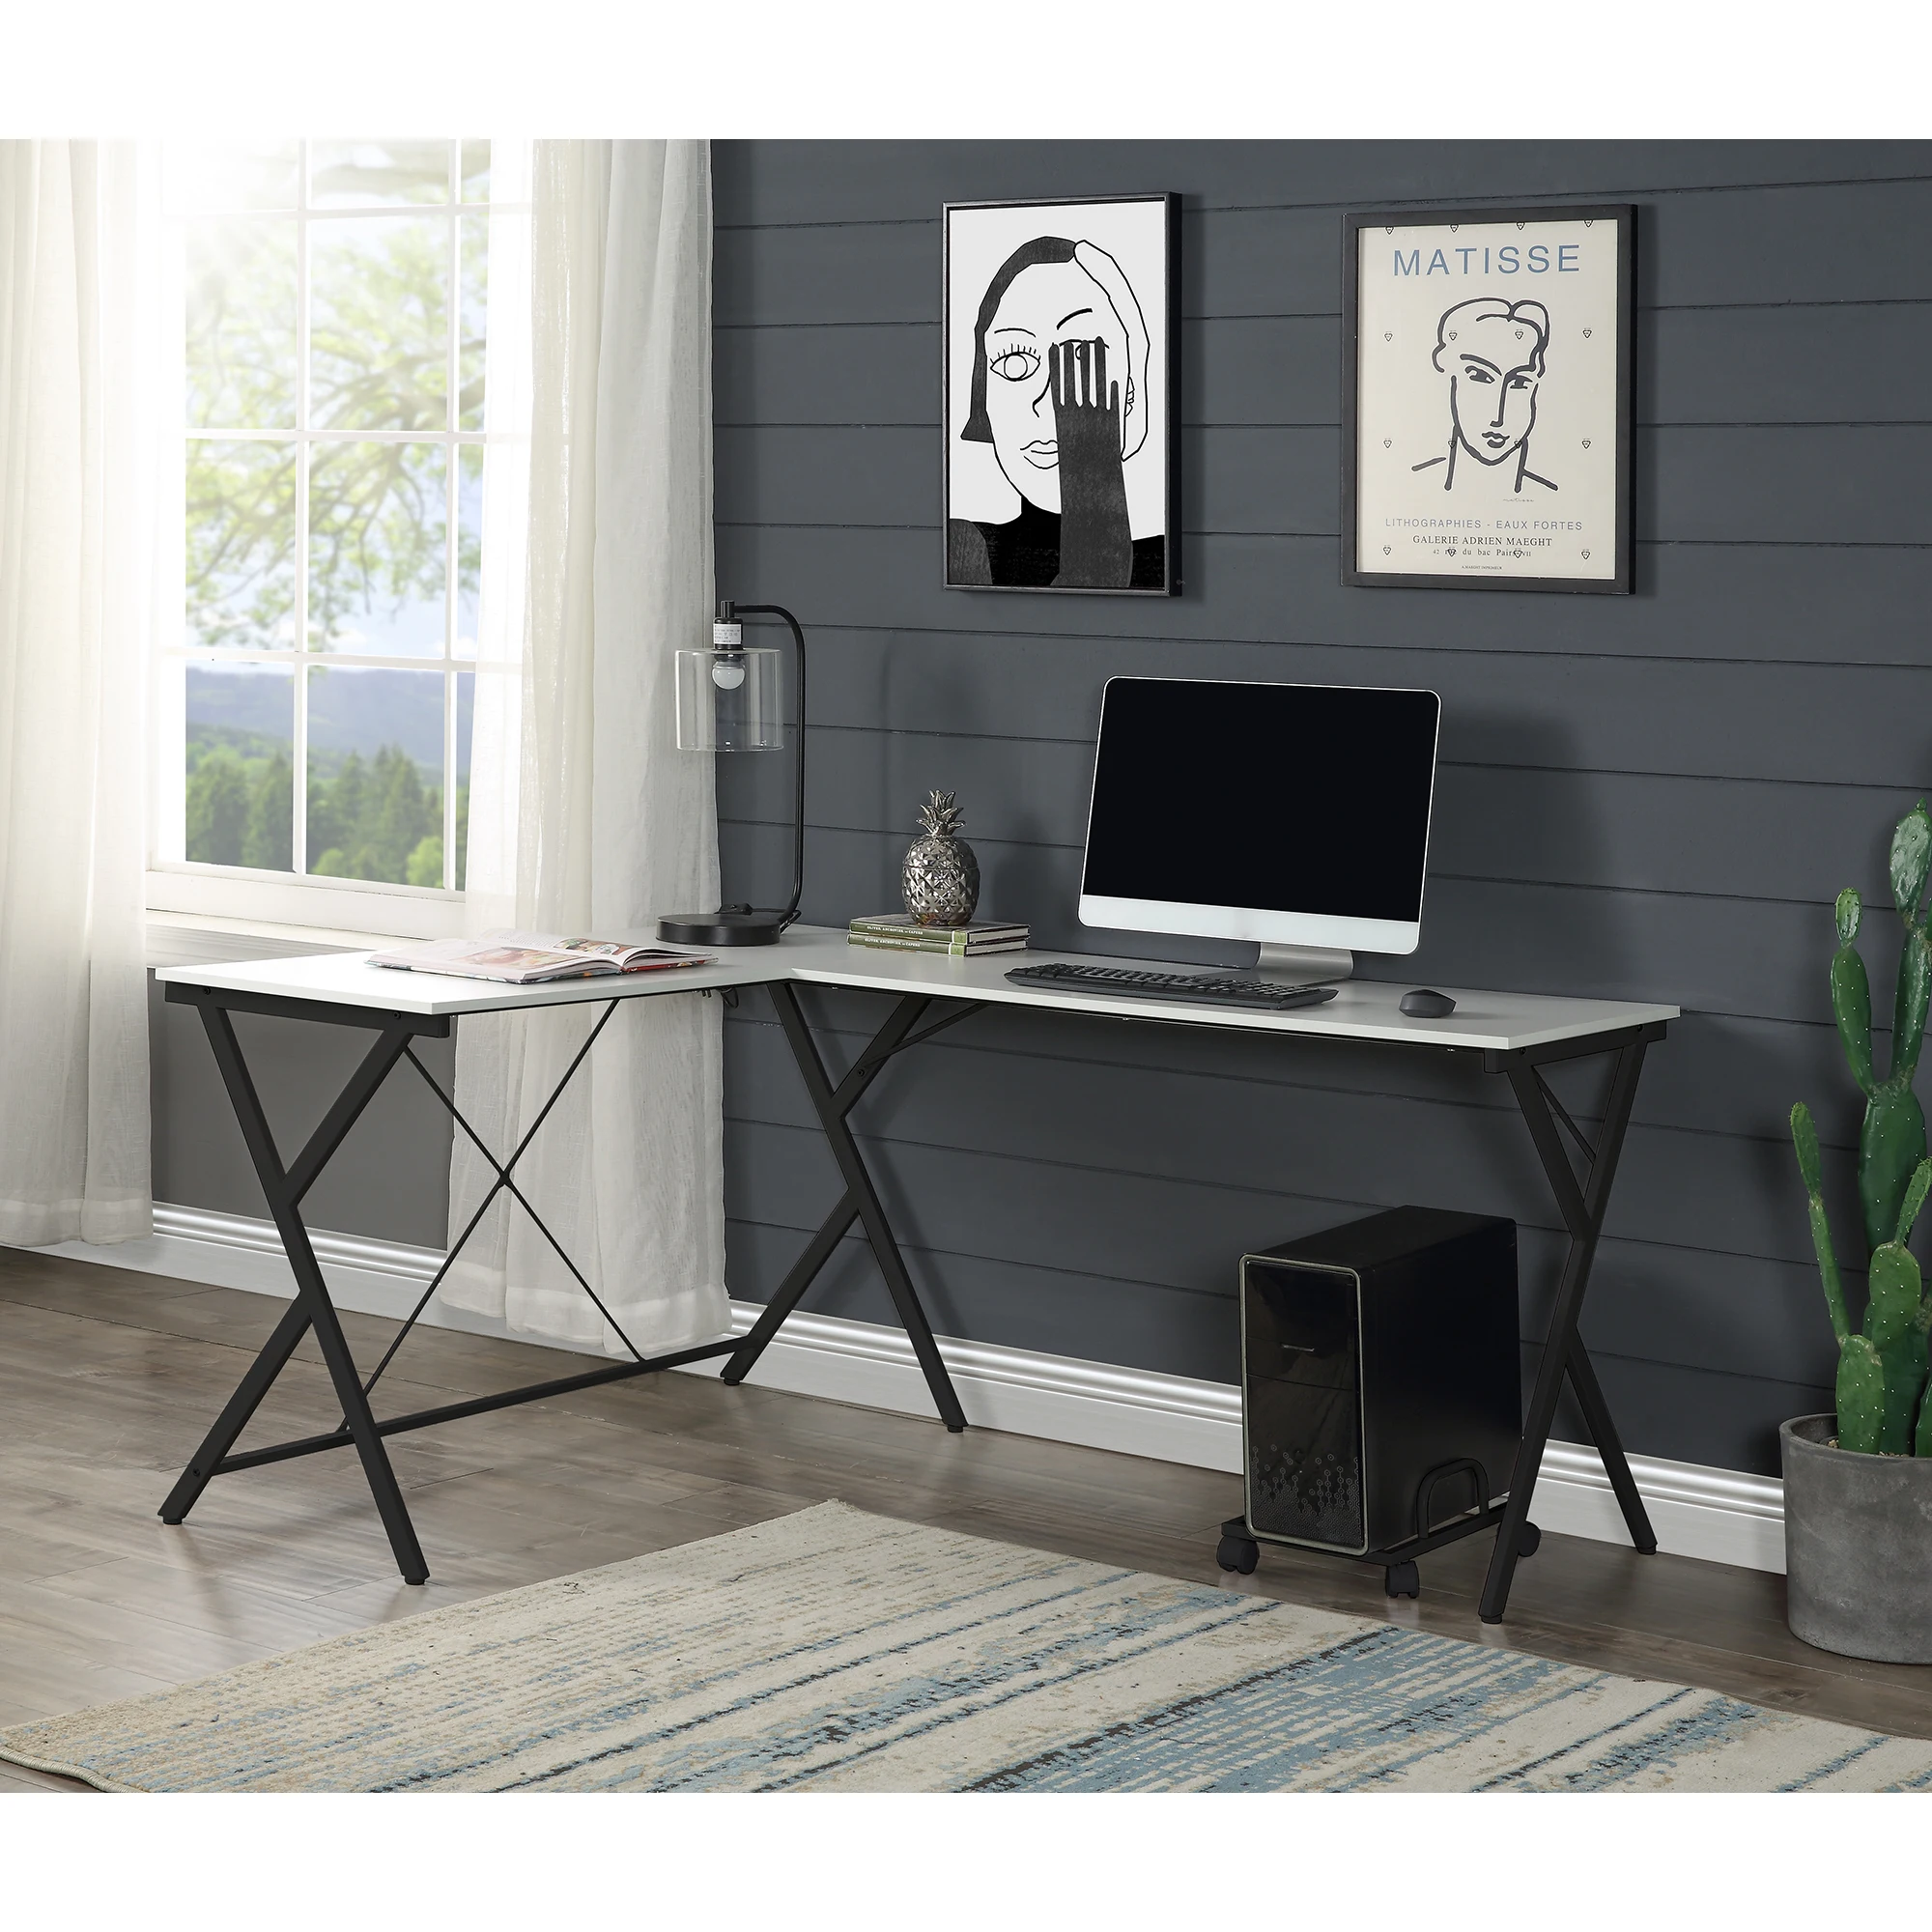 [Flash Sale]Dazenus Corner Computer Desk L-Shaped Office Game Table in White/Black Finish Ideal for Office Study & Game[US-W] 33in 83cm studio flash translucent umbrella white soft